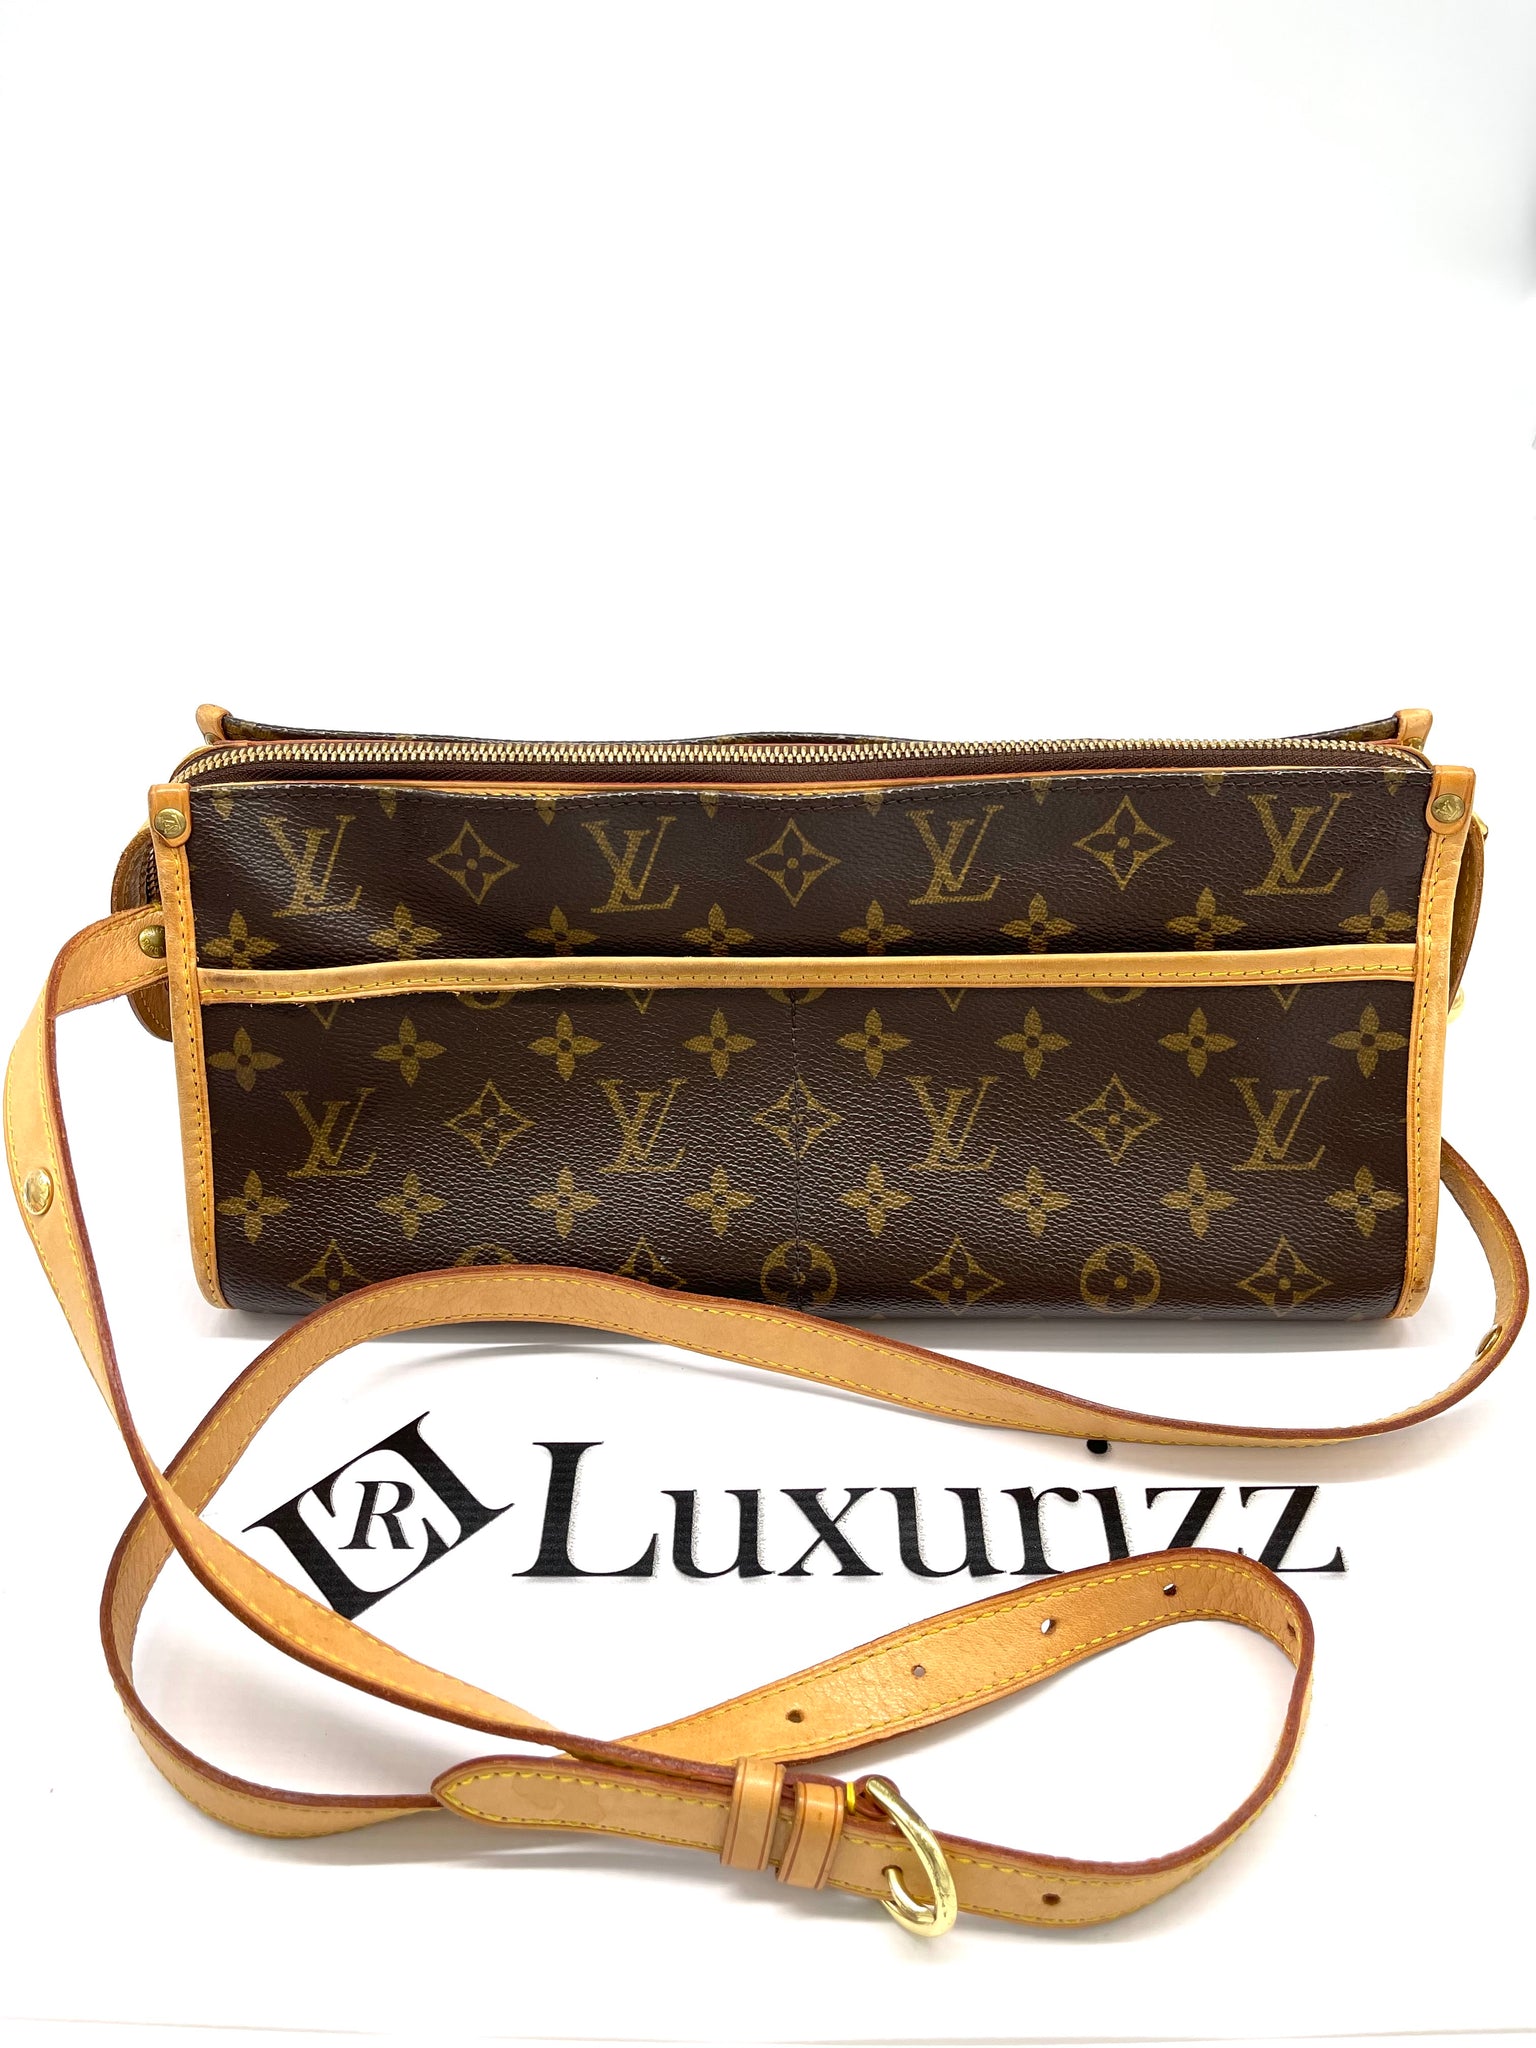 Popincourt leather handbag